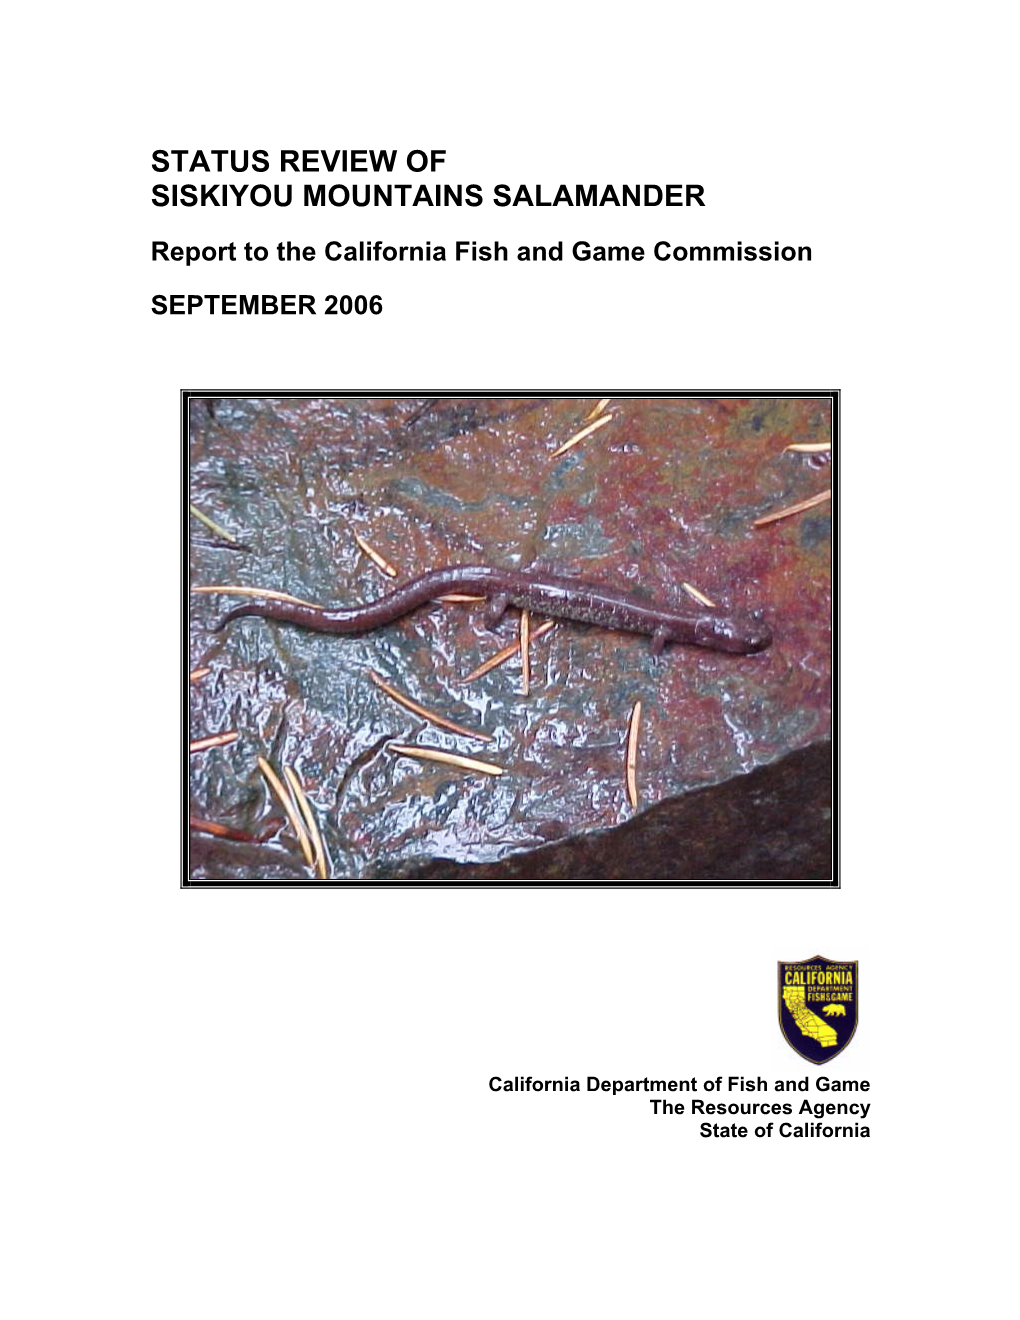 Status Review of Siskiyou Mountains Salamander